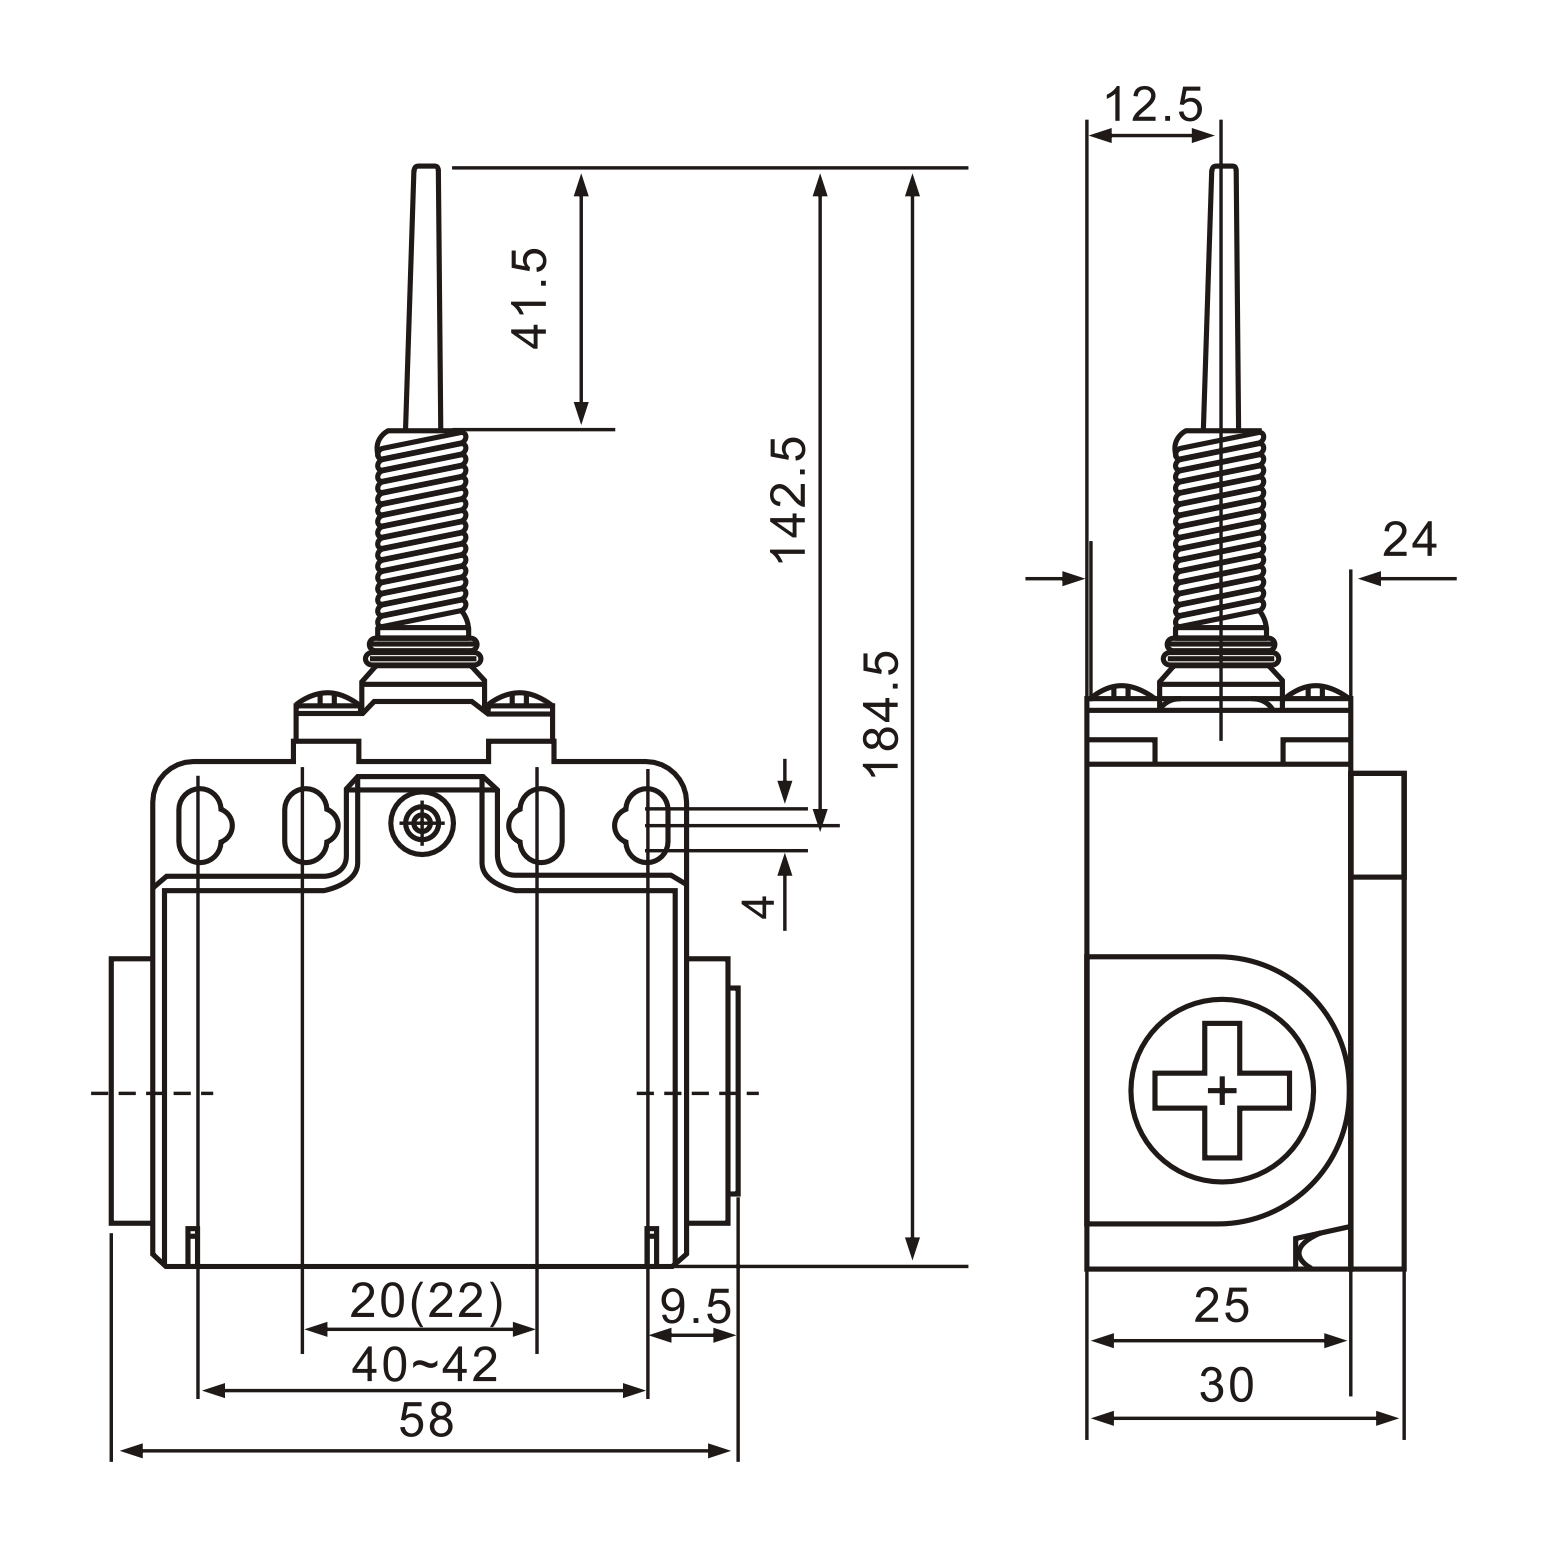 XCK-T171 Spring Rod Lever Limit Switch Diagram